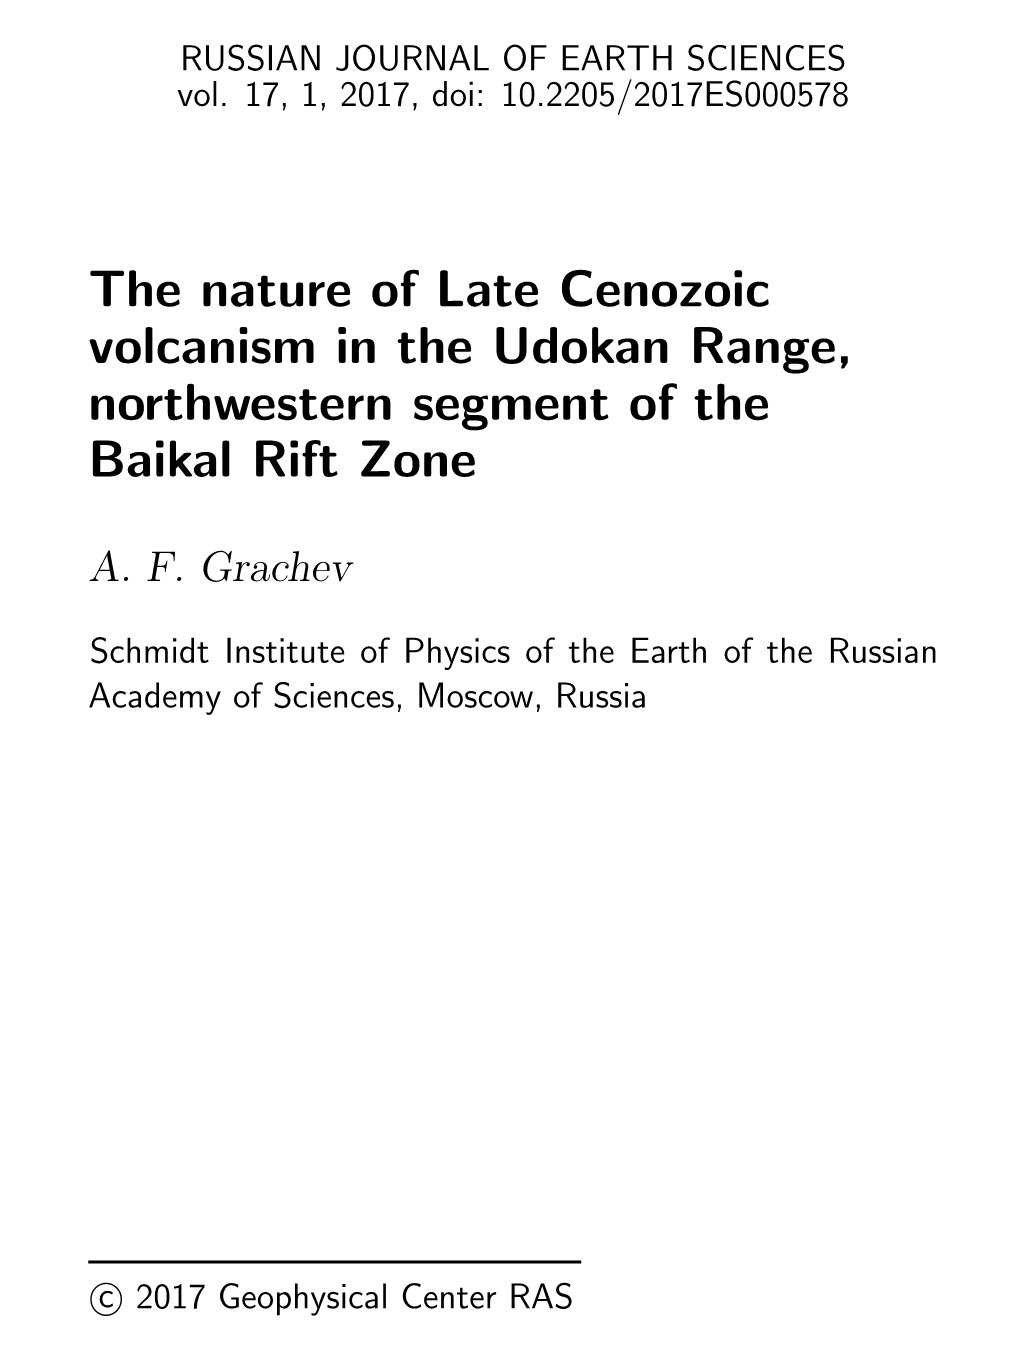 The Nature of Late Cenozoic Volcanism in the Udokan Range, Northwestern Segment of the Baikal Rift Zone